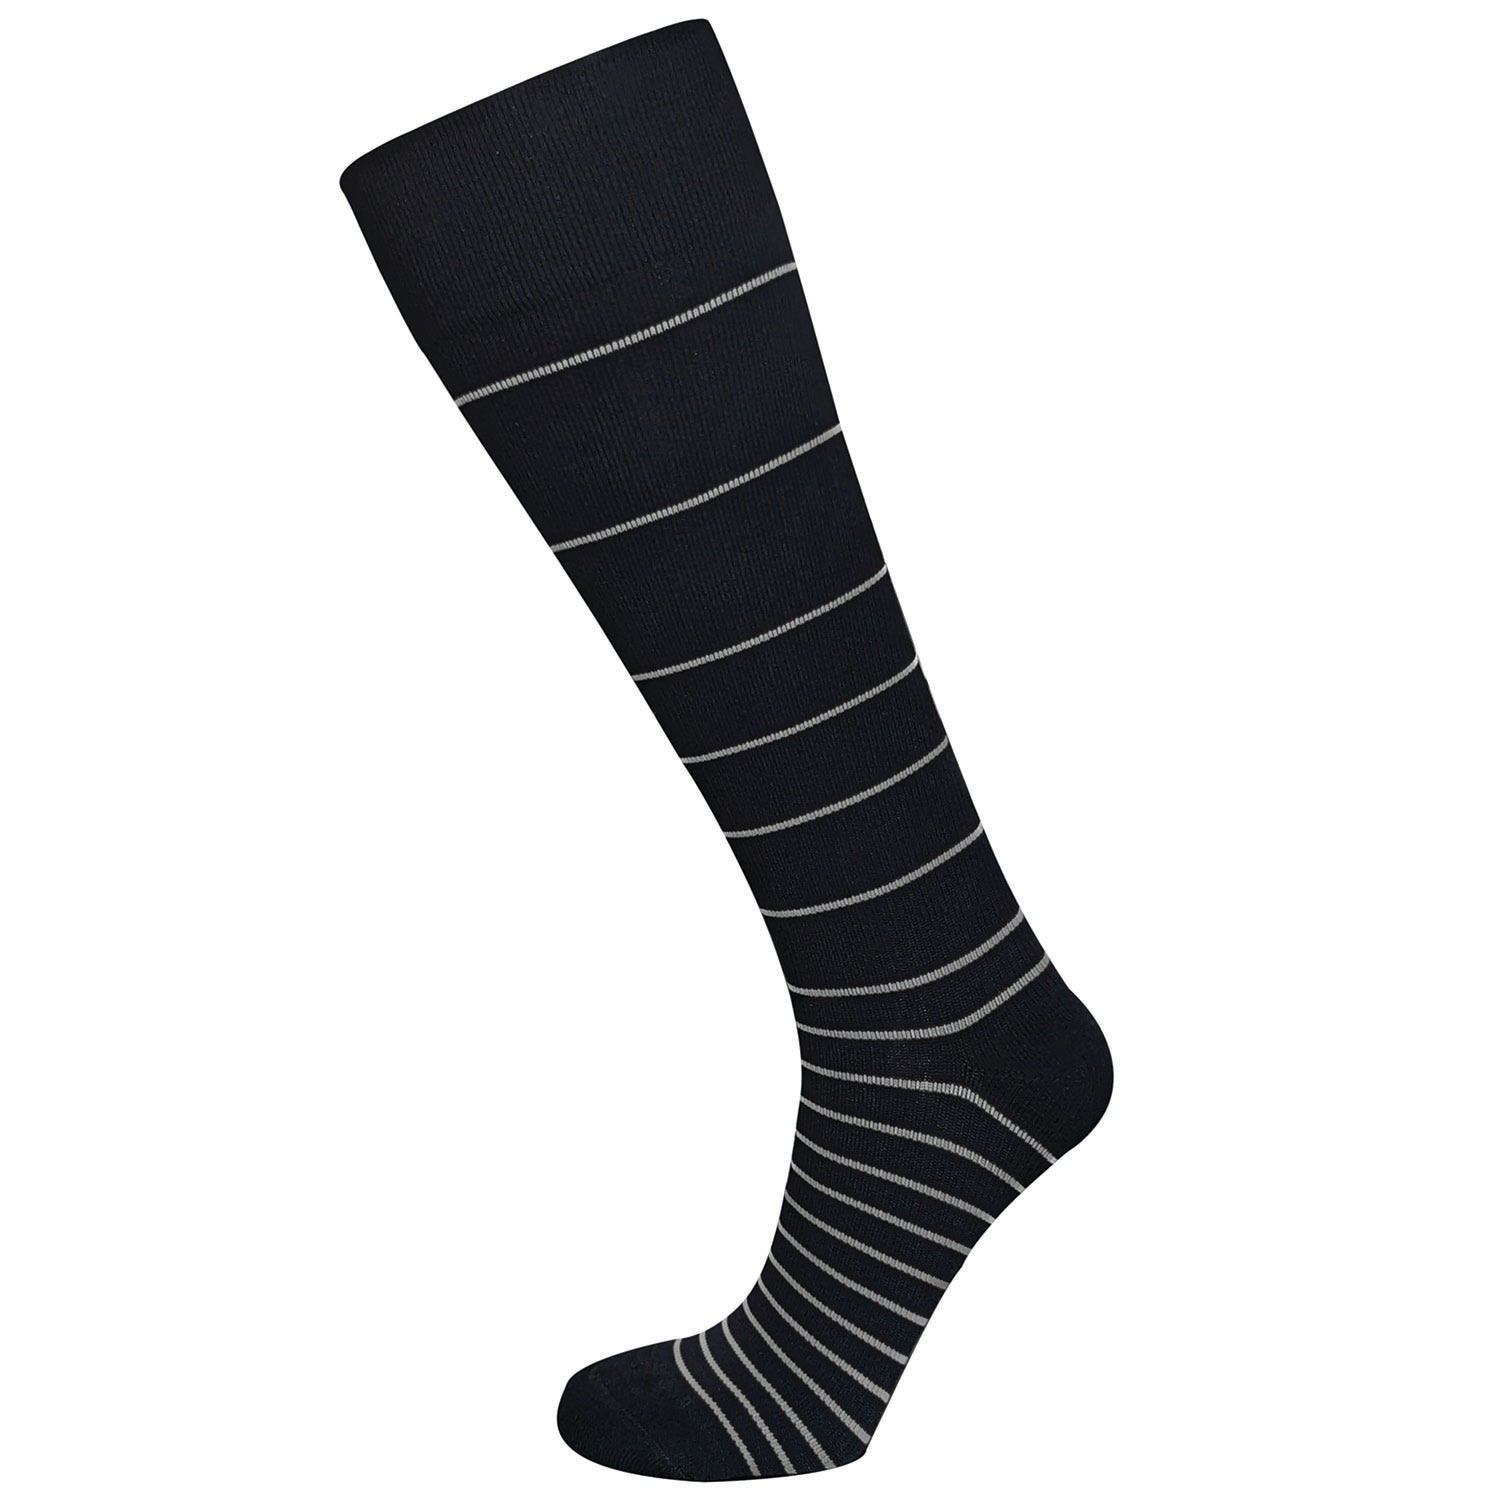 AW Style 650 Stripe Knee High Socks - 15-20 mmHg | Ames Walker